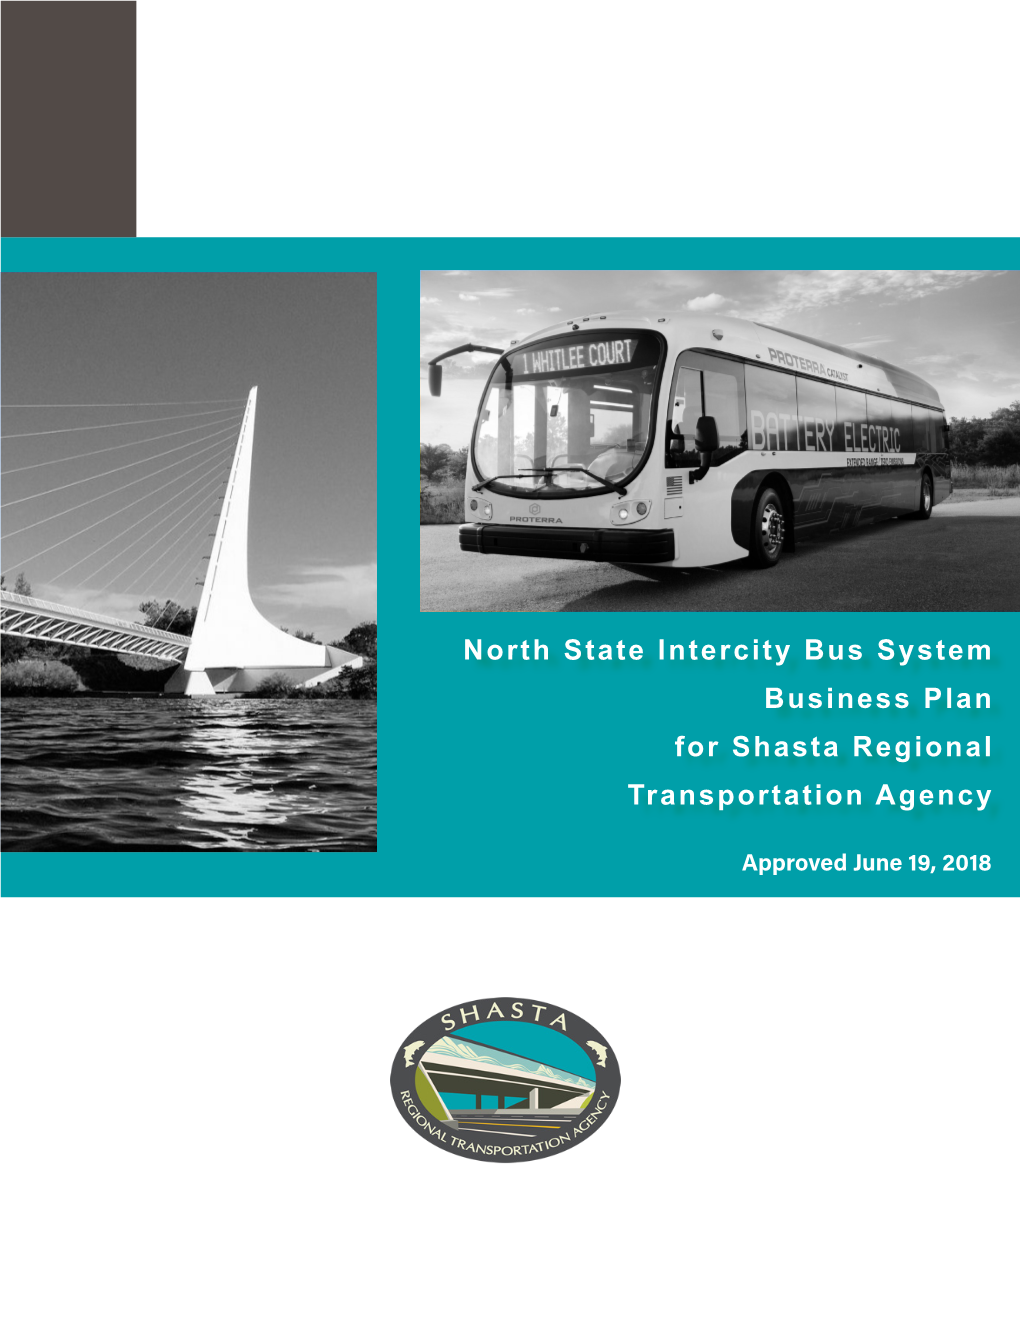 North State Intercity Bus System Business Plan for Shasta Regional Transportation Agency